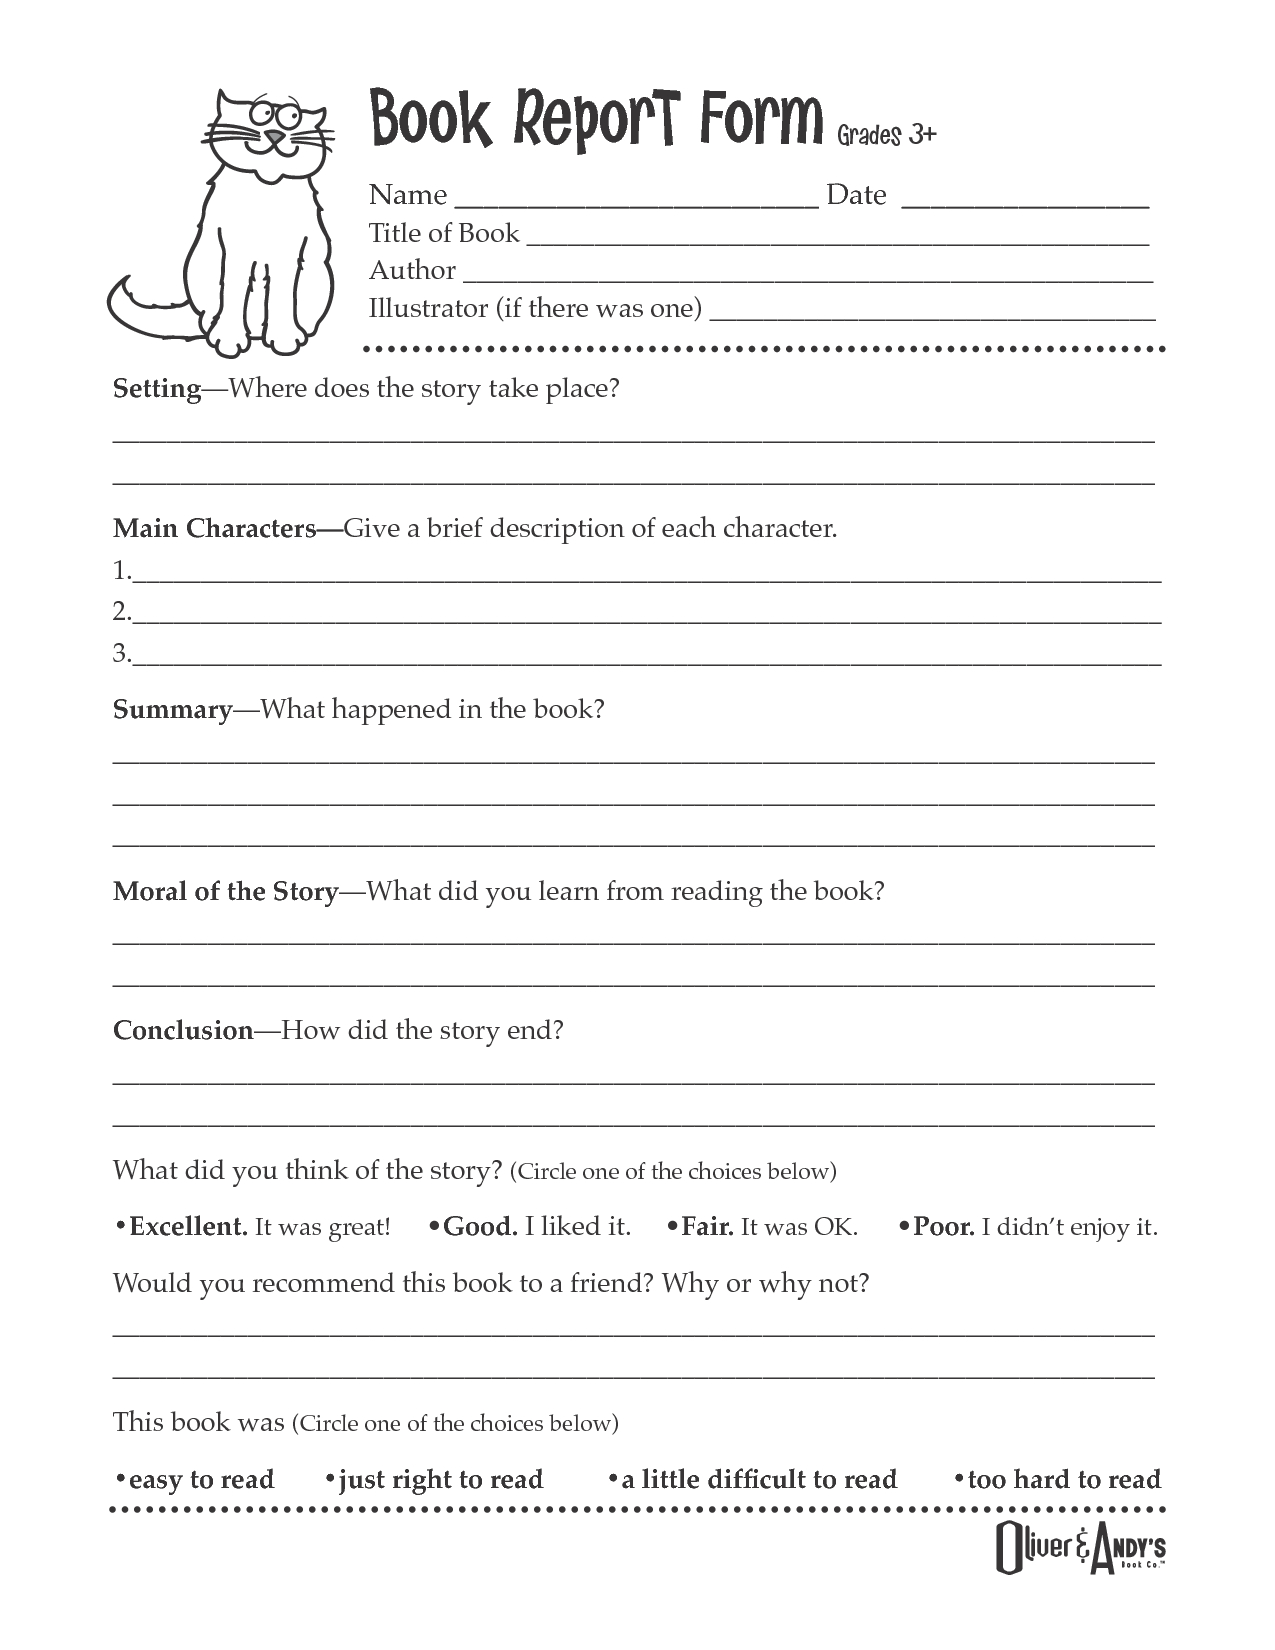 Second Grade Book Report Template | Book Report Form Grades With Regard To 6Th Grade Book Report Template